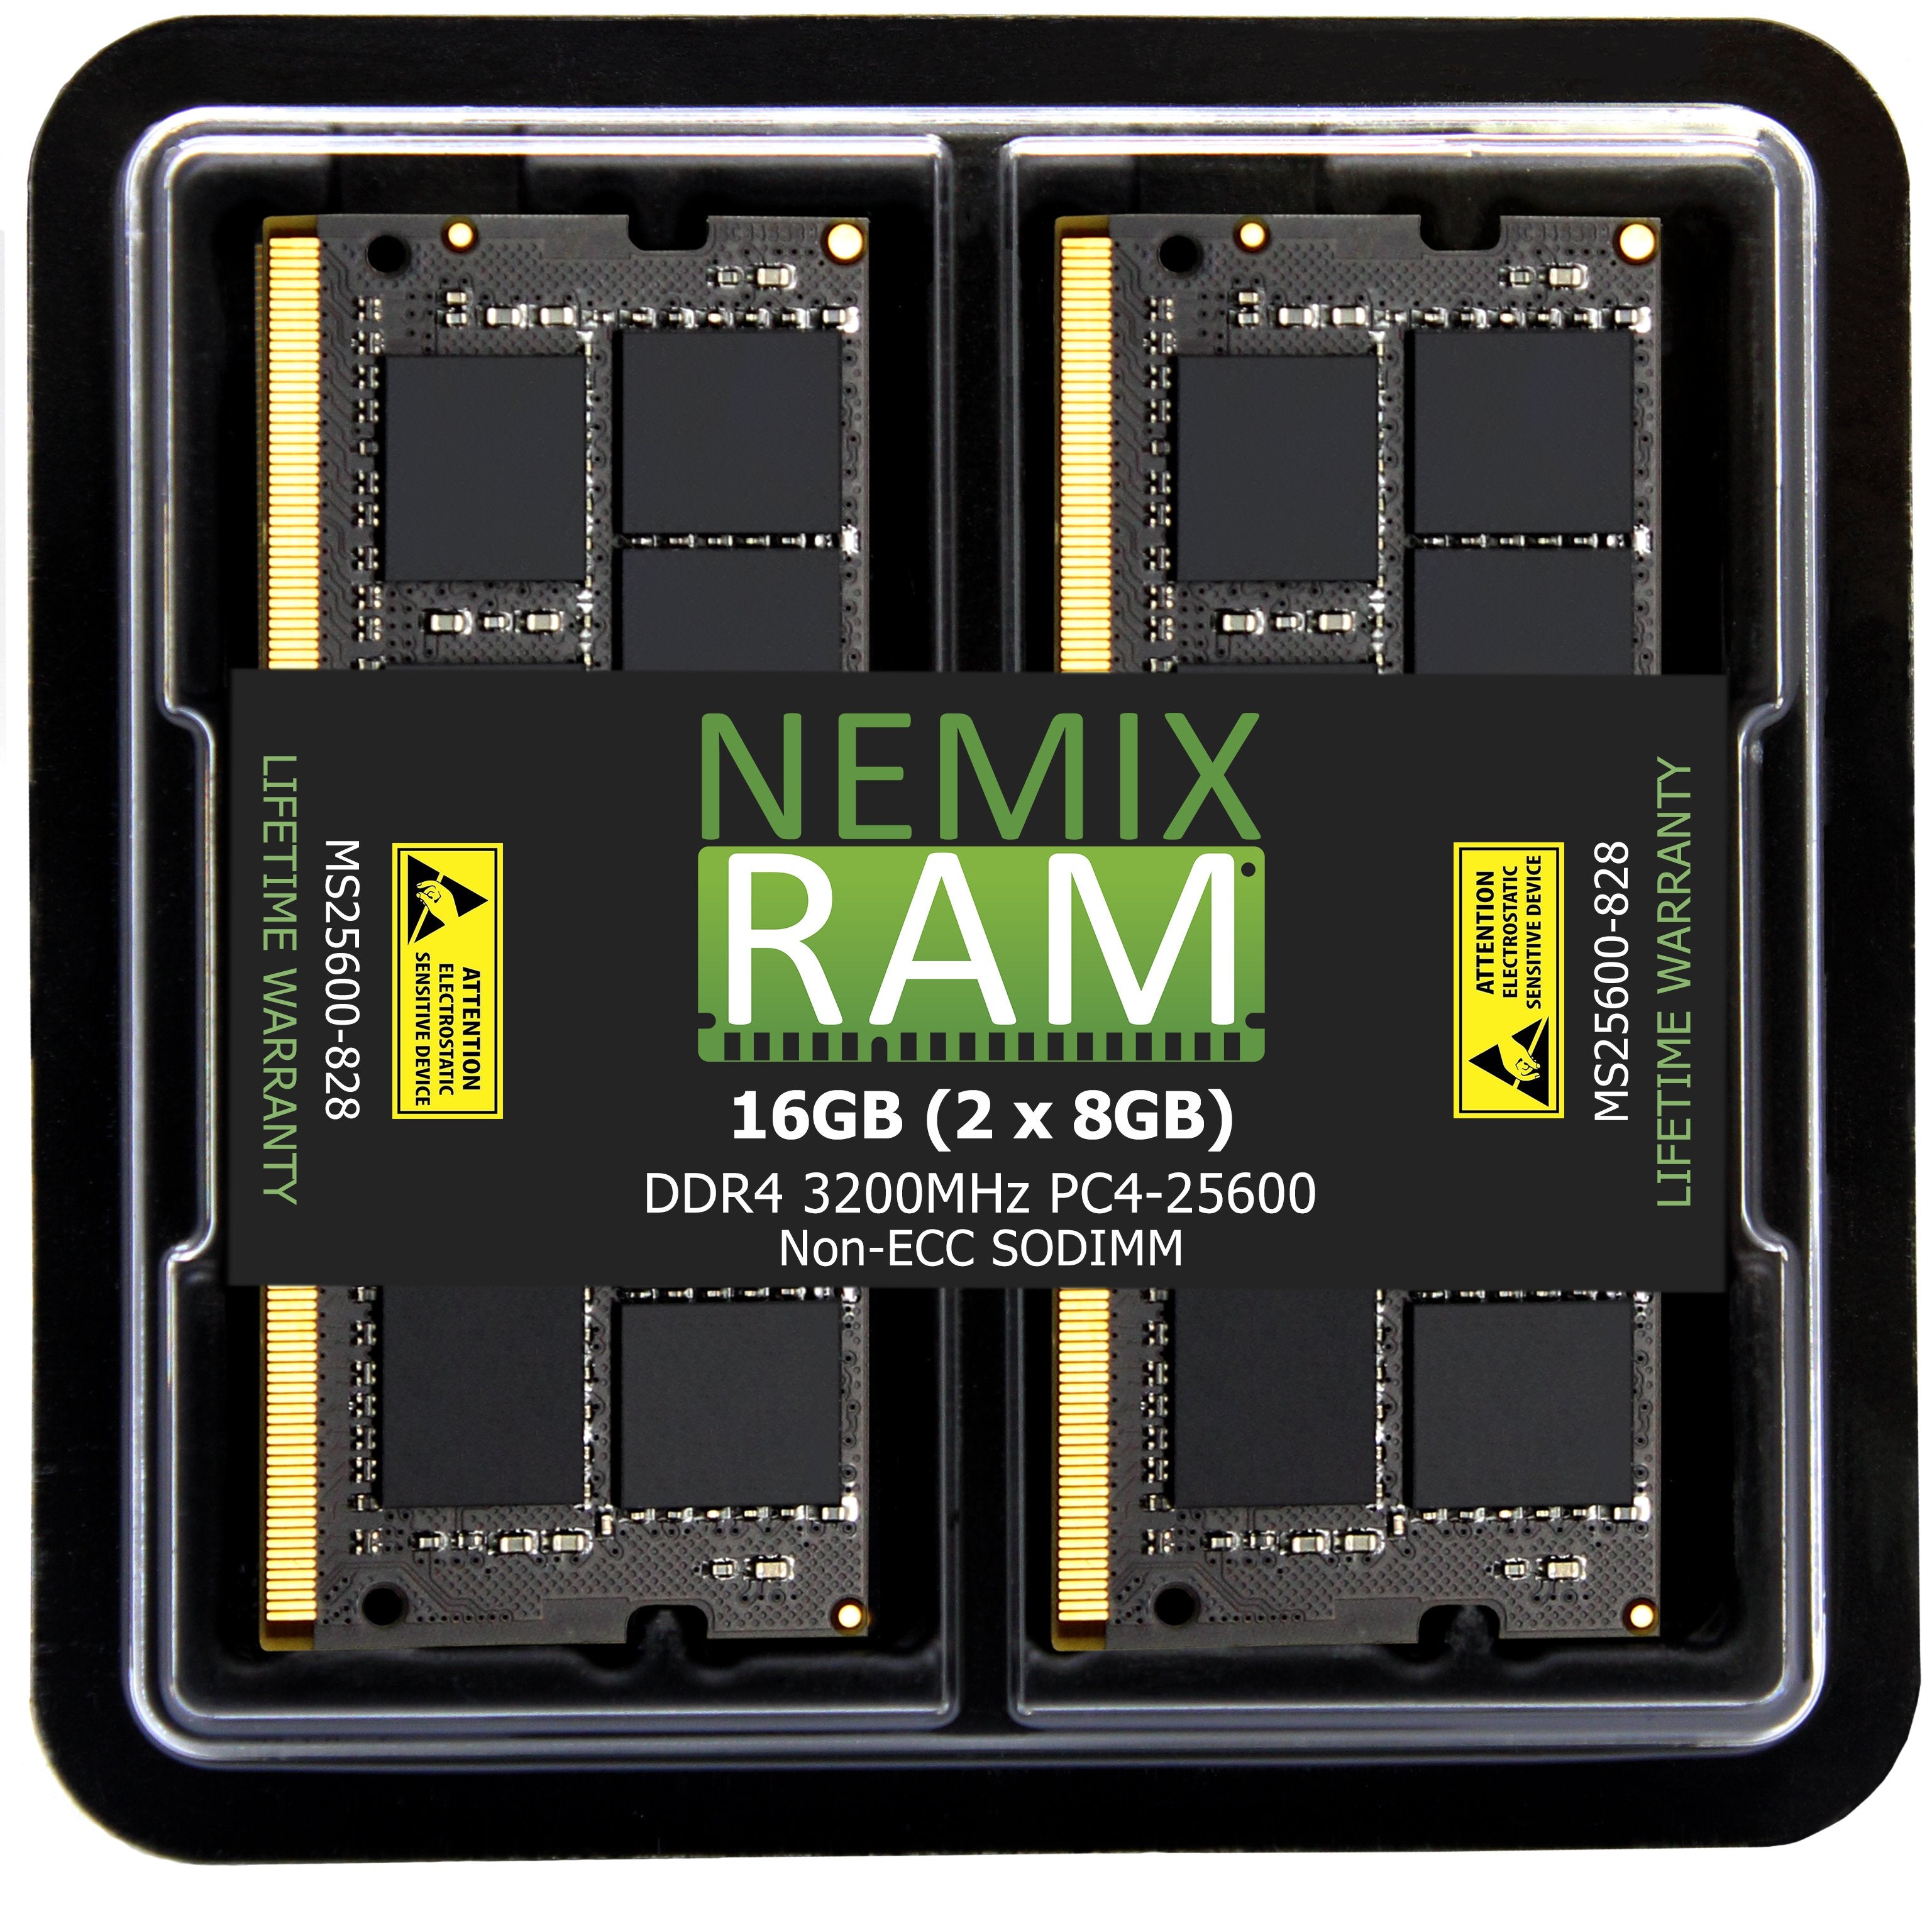 NEMIX RAM Fast ASUSTOR AS-8GD4 92M11-S8D40 Compatible Memory Upgrade